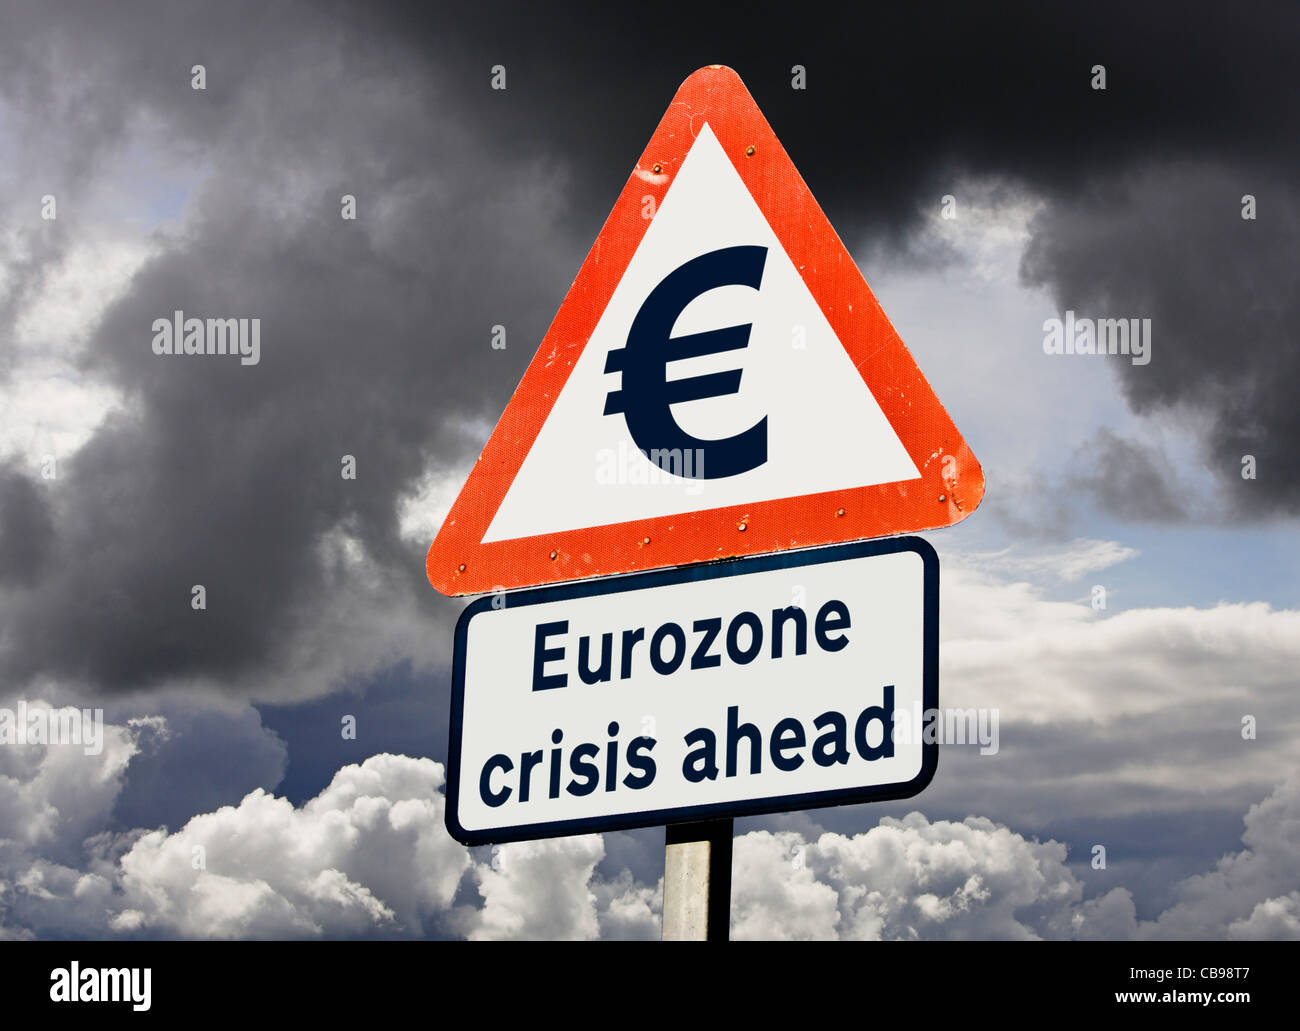 Eurozone EU European Union debt or political crisis break up threat concept warning sign against a stormy sky Stock Photo